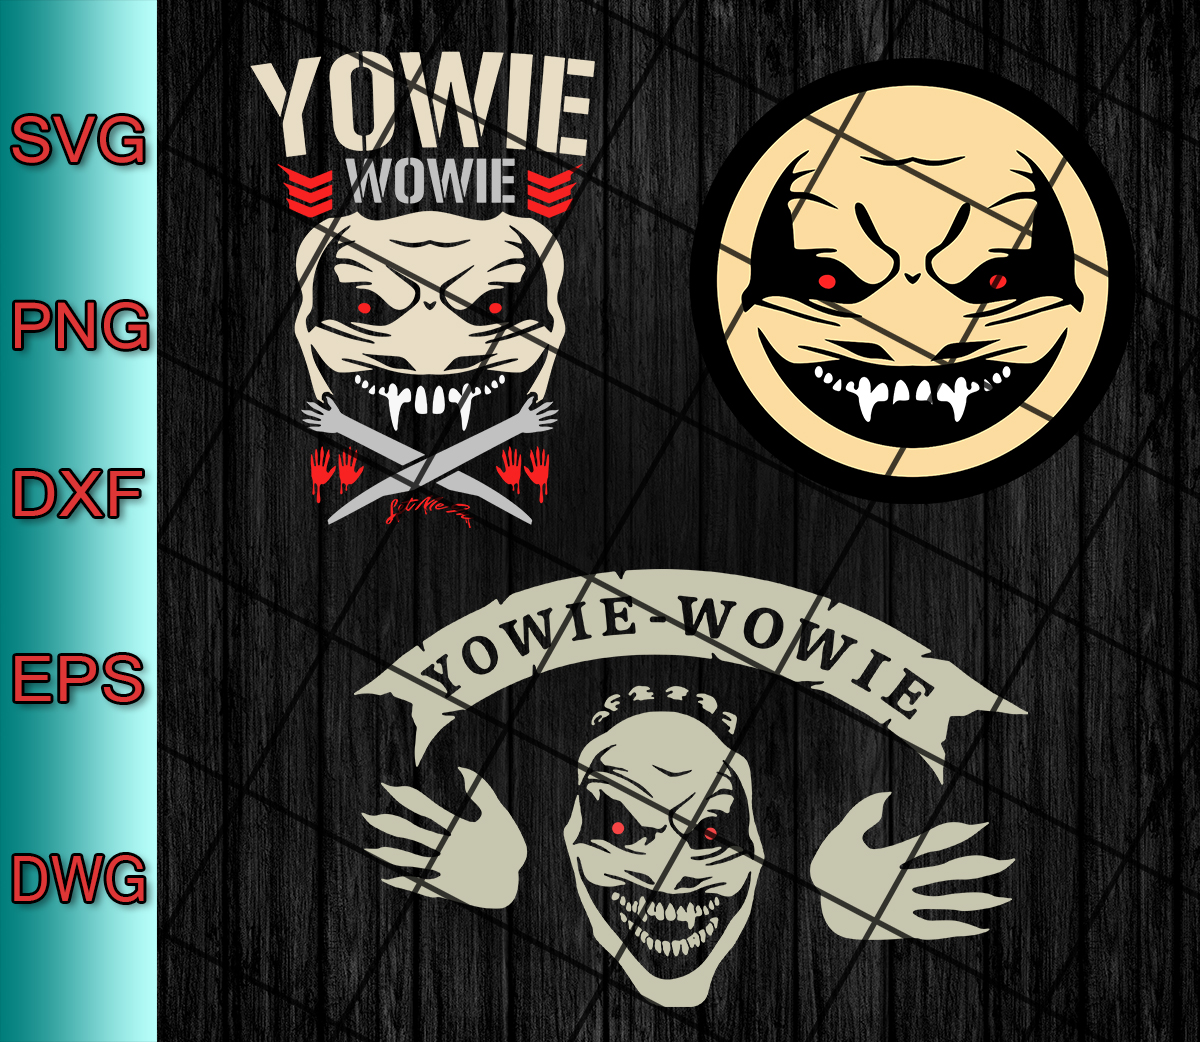 WWE Yowie Wowie SVG EPS PNG DXF